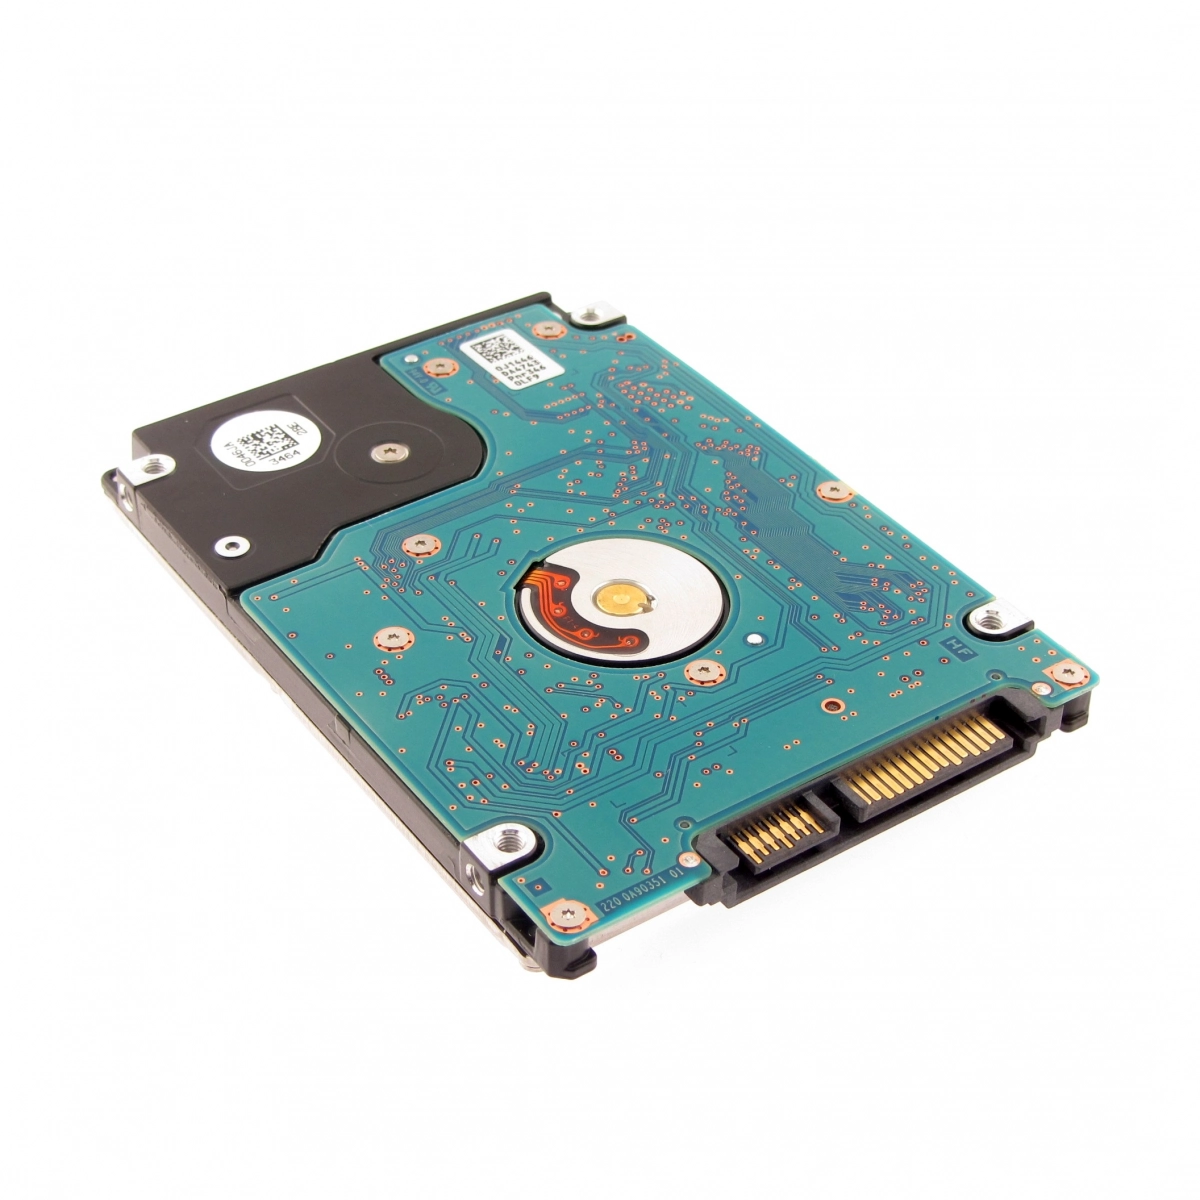 Notebook-Festplatte 1TB, 5400rpm, 128MB für TOSHIBA Netbook NB550D-11D